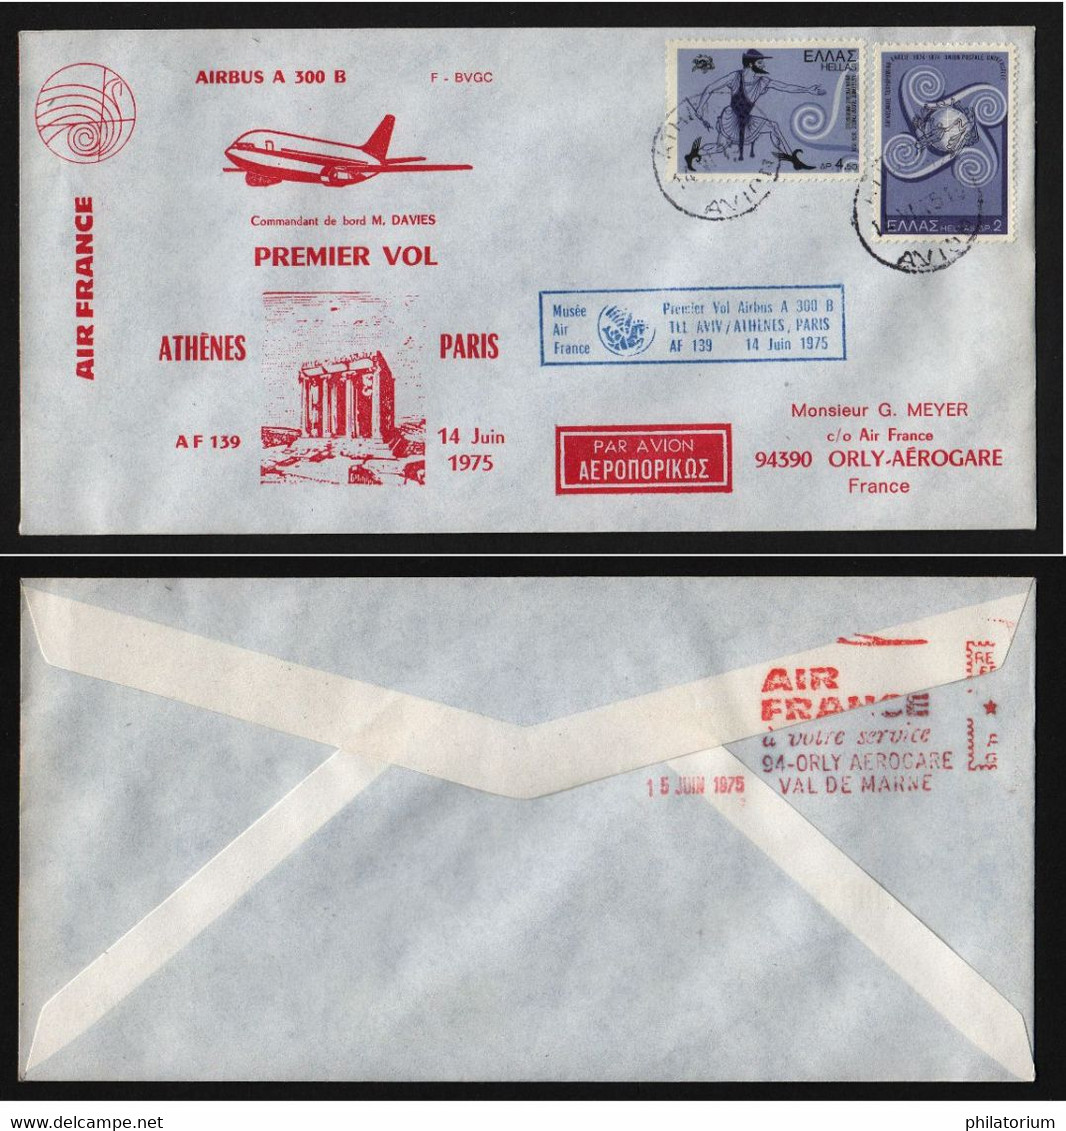 ATHENES  14 Juin 1975  1° Vol Airbus A 300 B  Tel Aviv - Athènes - Paris - Postembleem & Poststempel